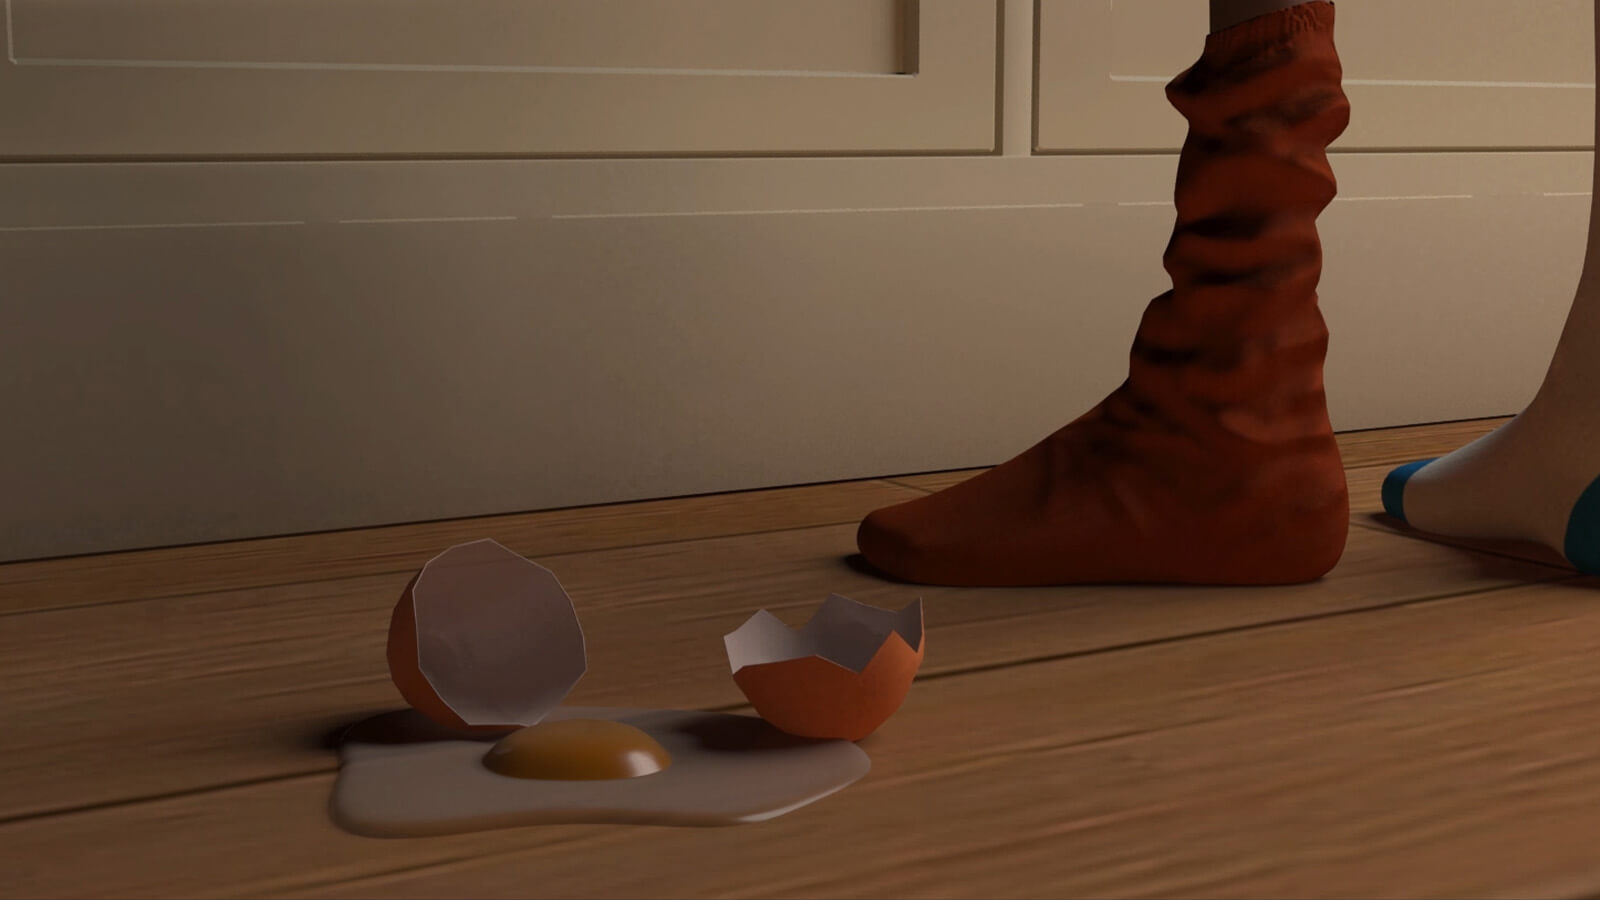 A broken egg lies next to its shell on a wooden floor